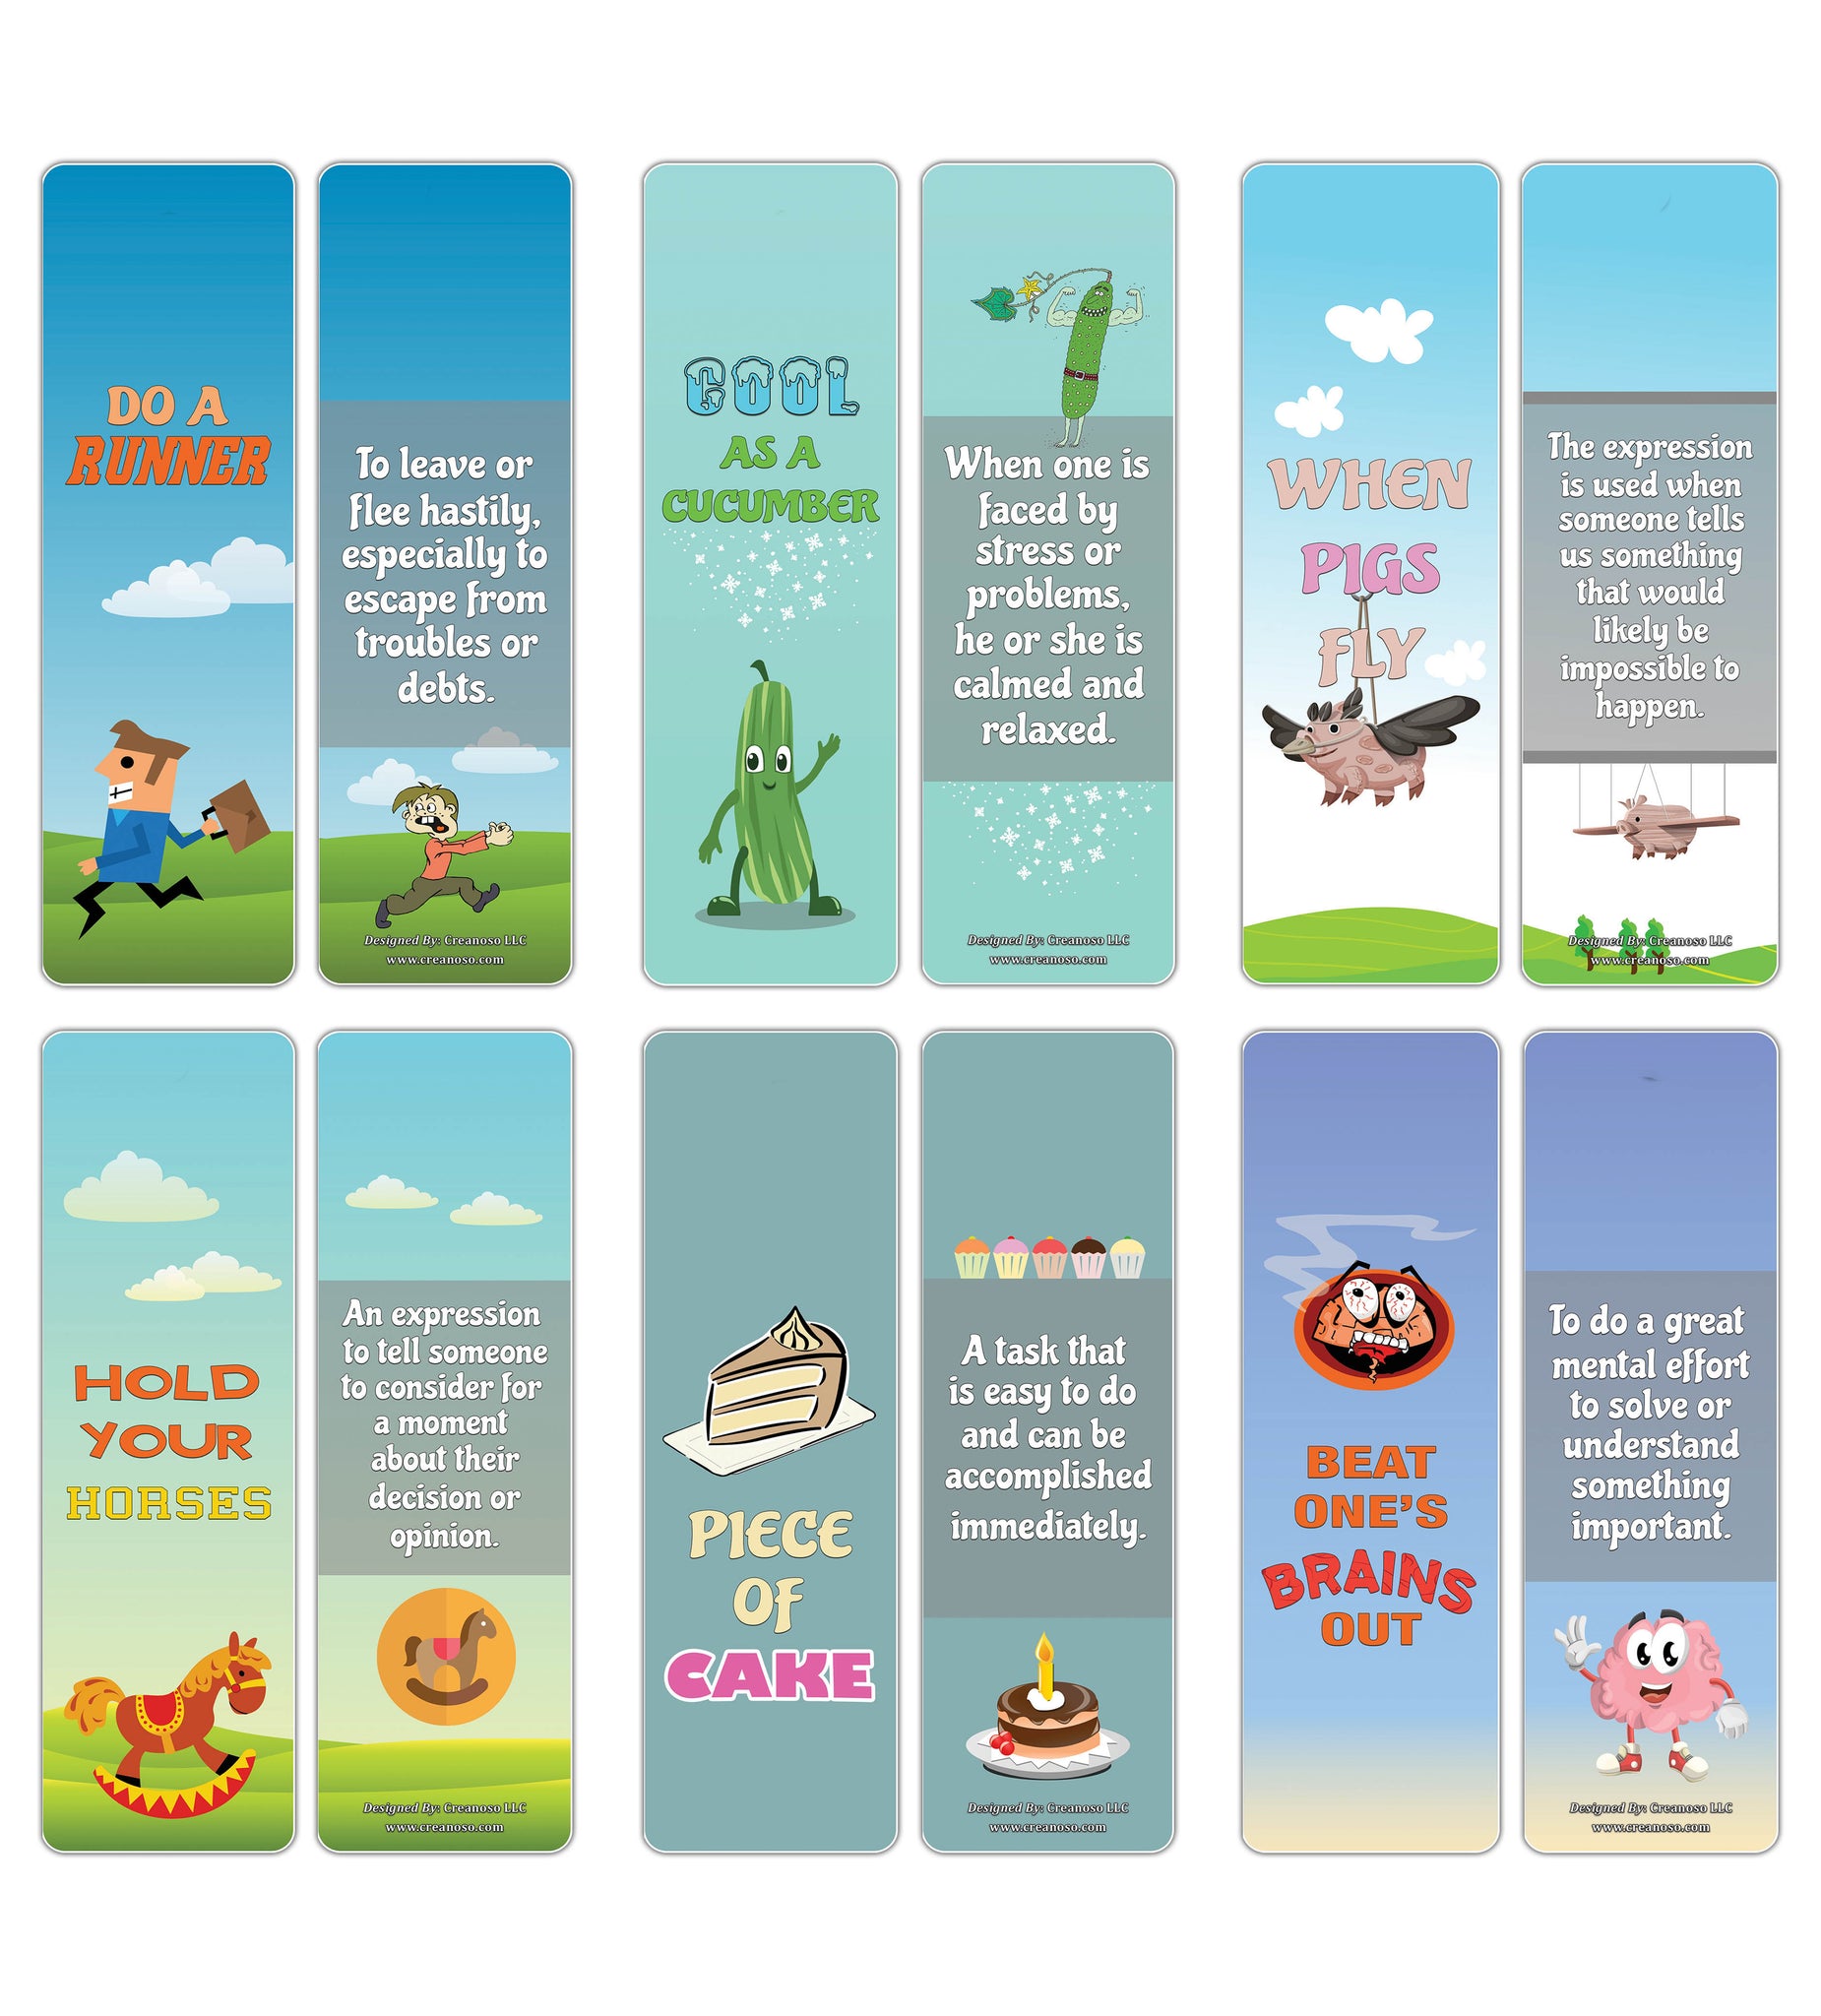 Creanoso Funny Idioms Bookmarks for Kids ÃƒÂ¢Ã¢â€šÂ¬Ã¢â‚¬Å“ Premium Gift Set Book Clippers